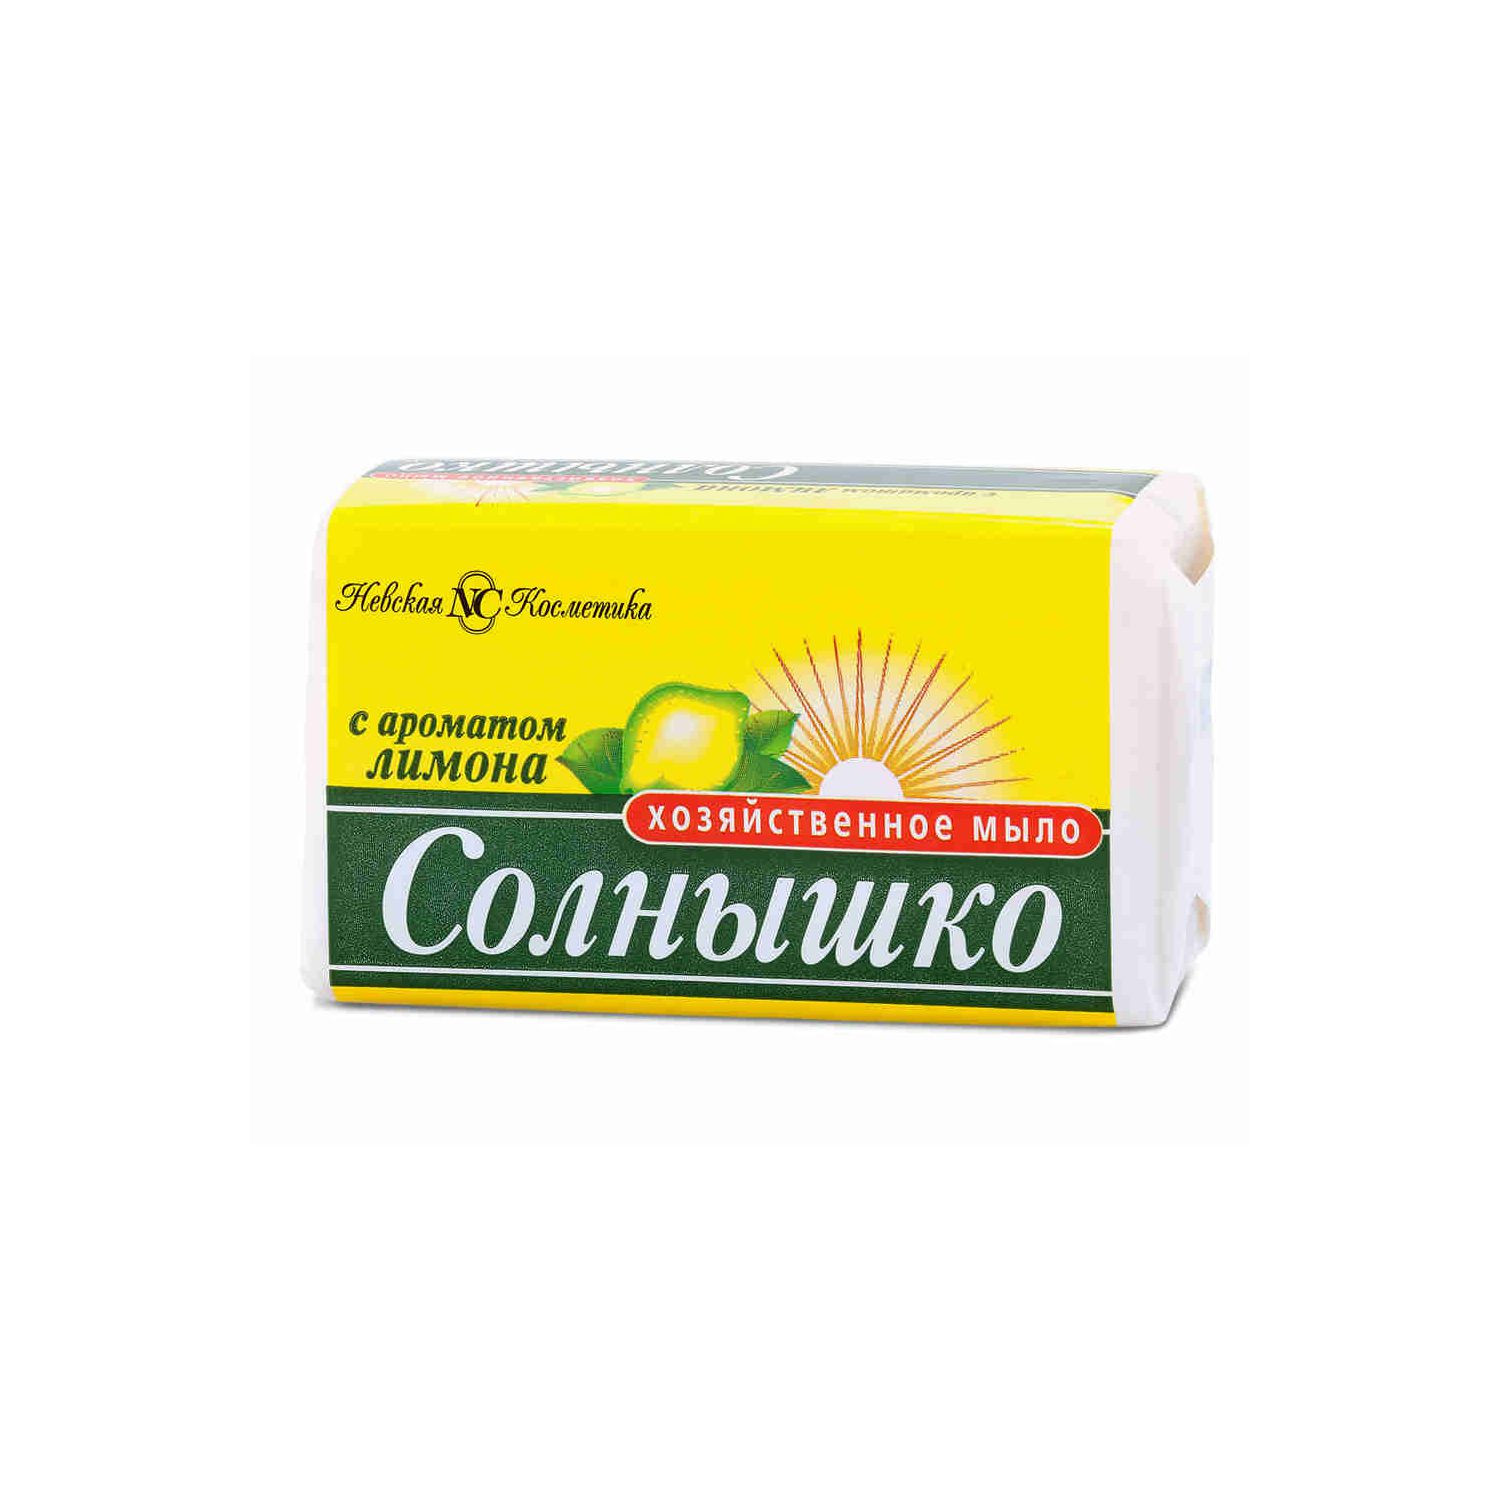 Мыло Хоз НК Солнышко Лимон 140г - интернет-магазин Близнецы